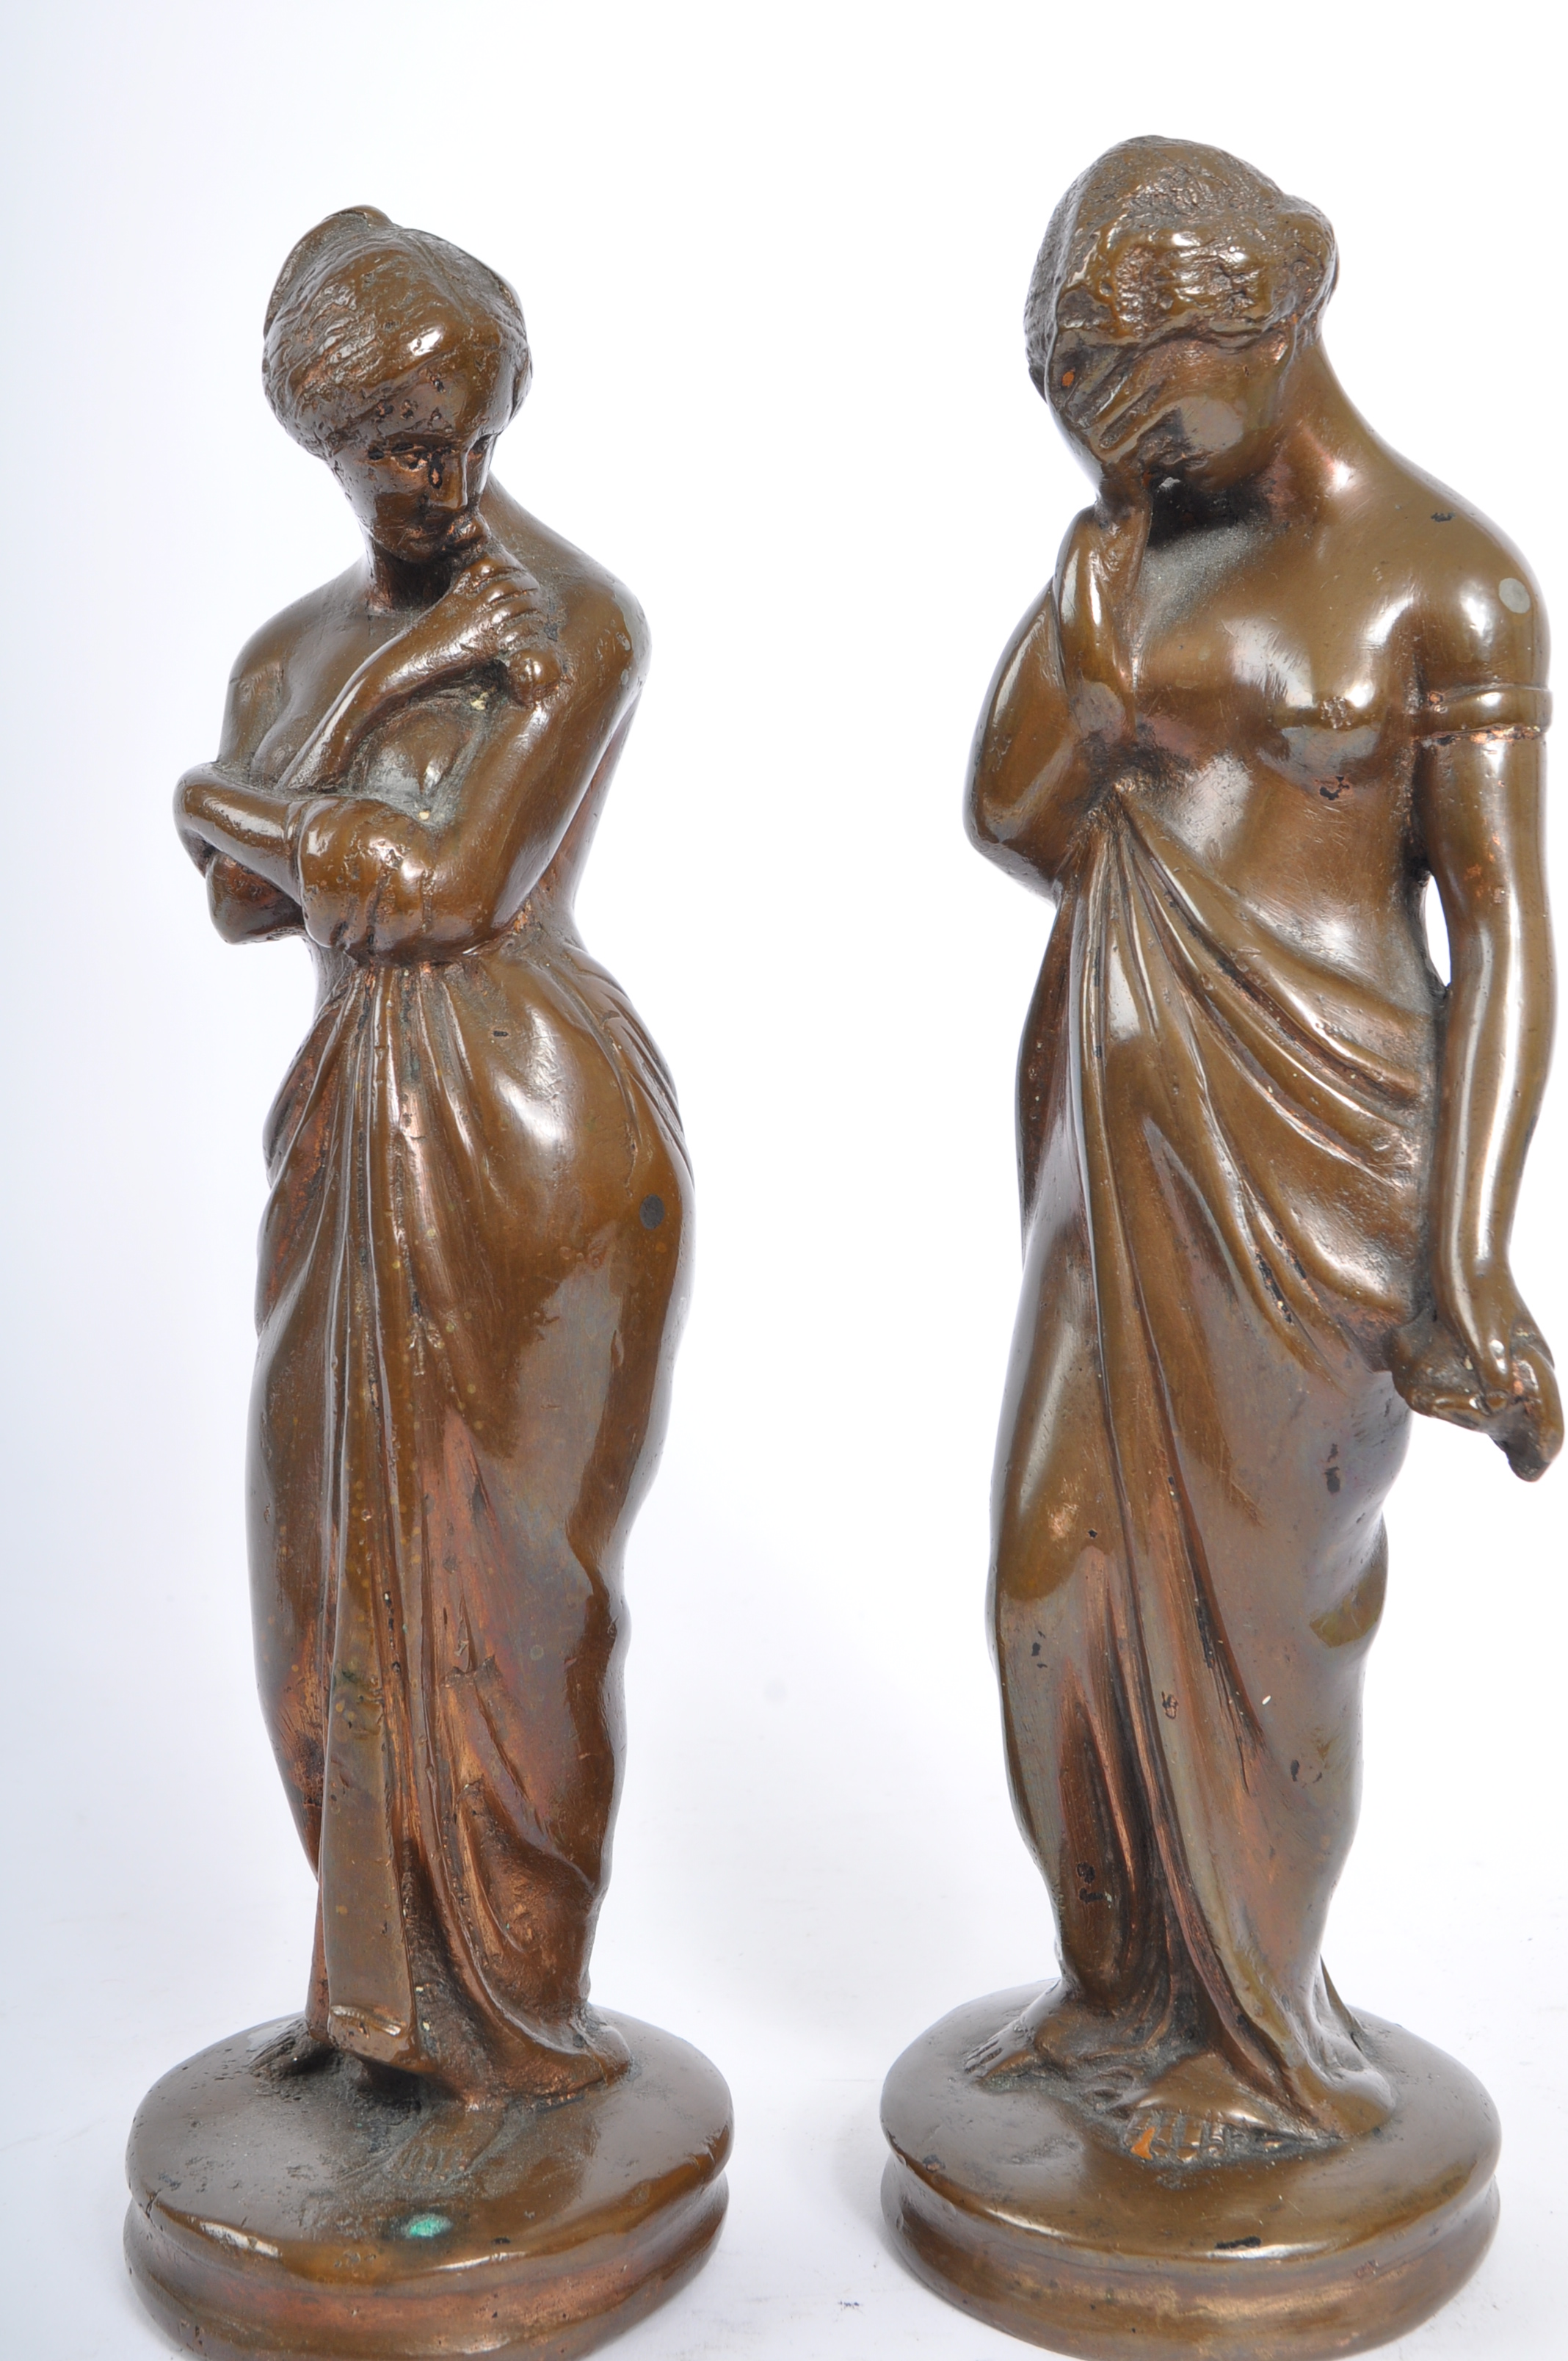 PAIR OF 19TH CENTURY BRONZE STATUES OF SEMI NUDE FEMALES